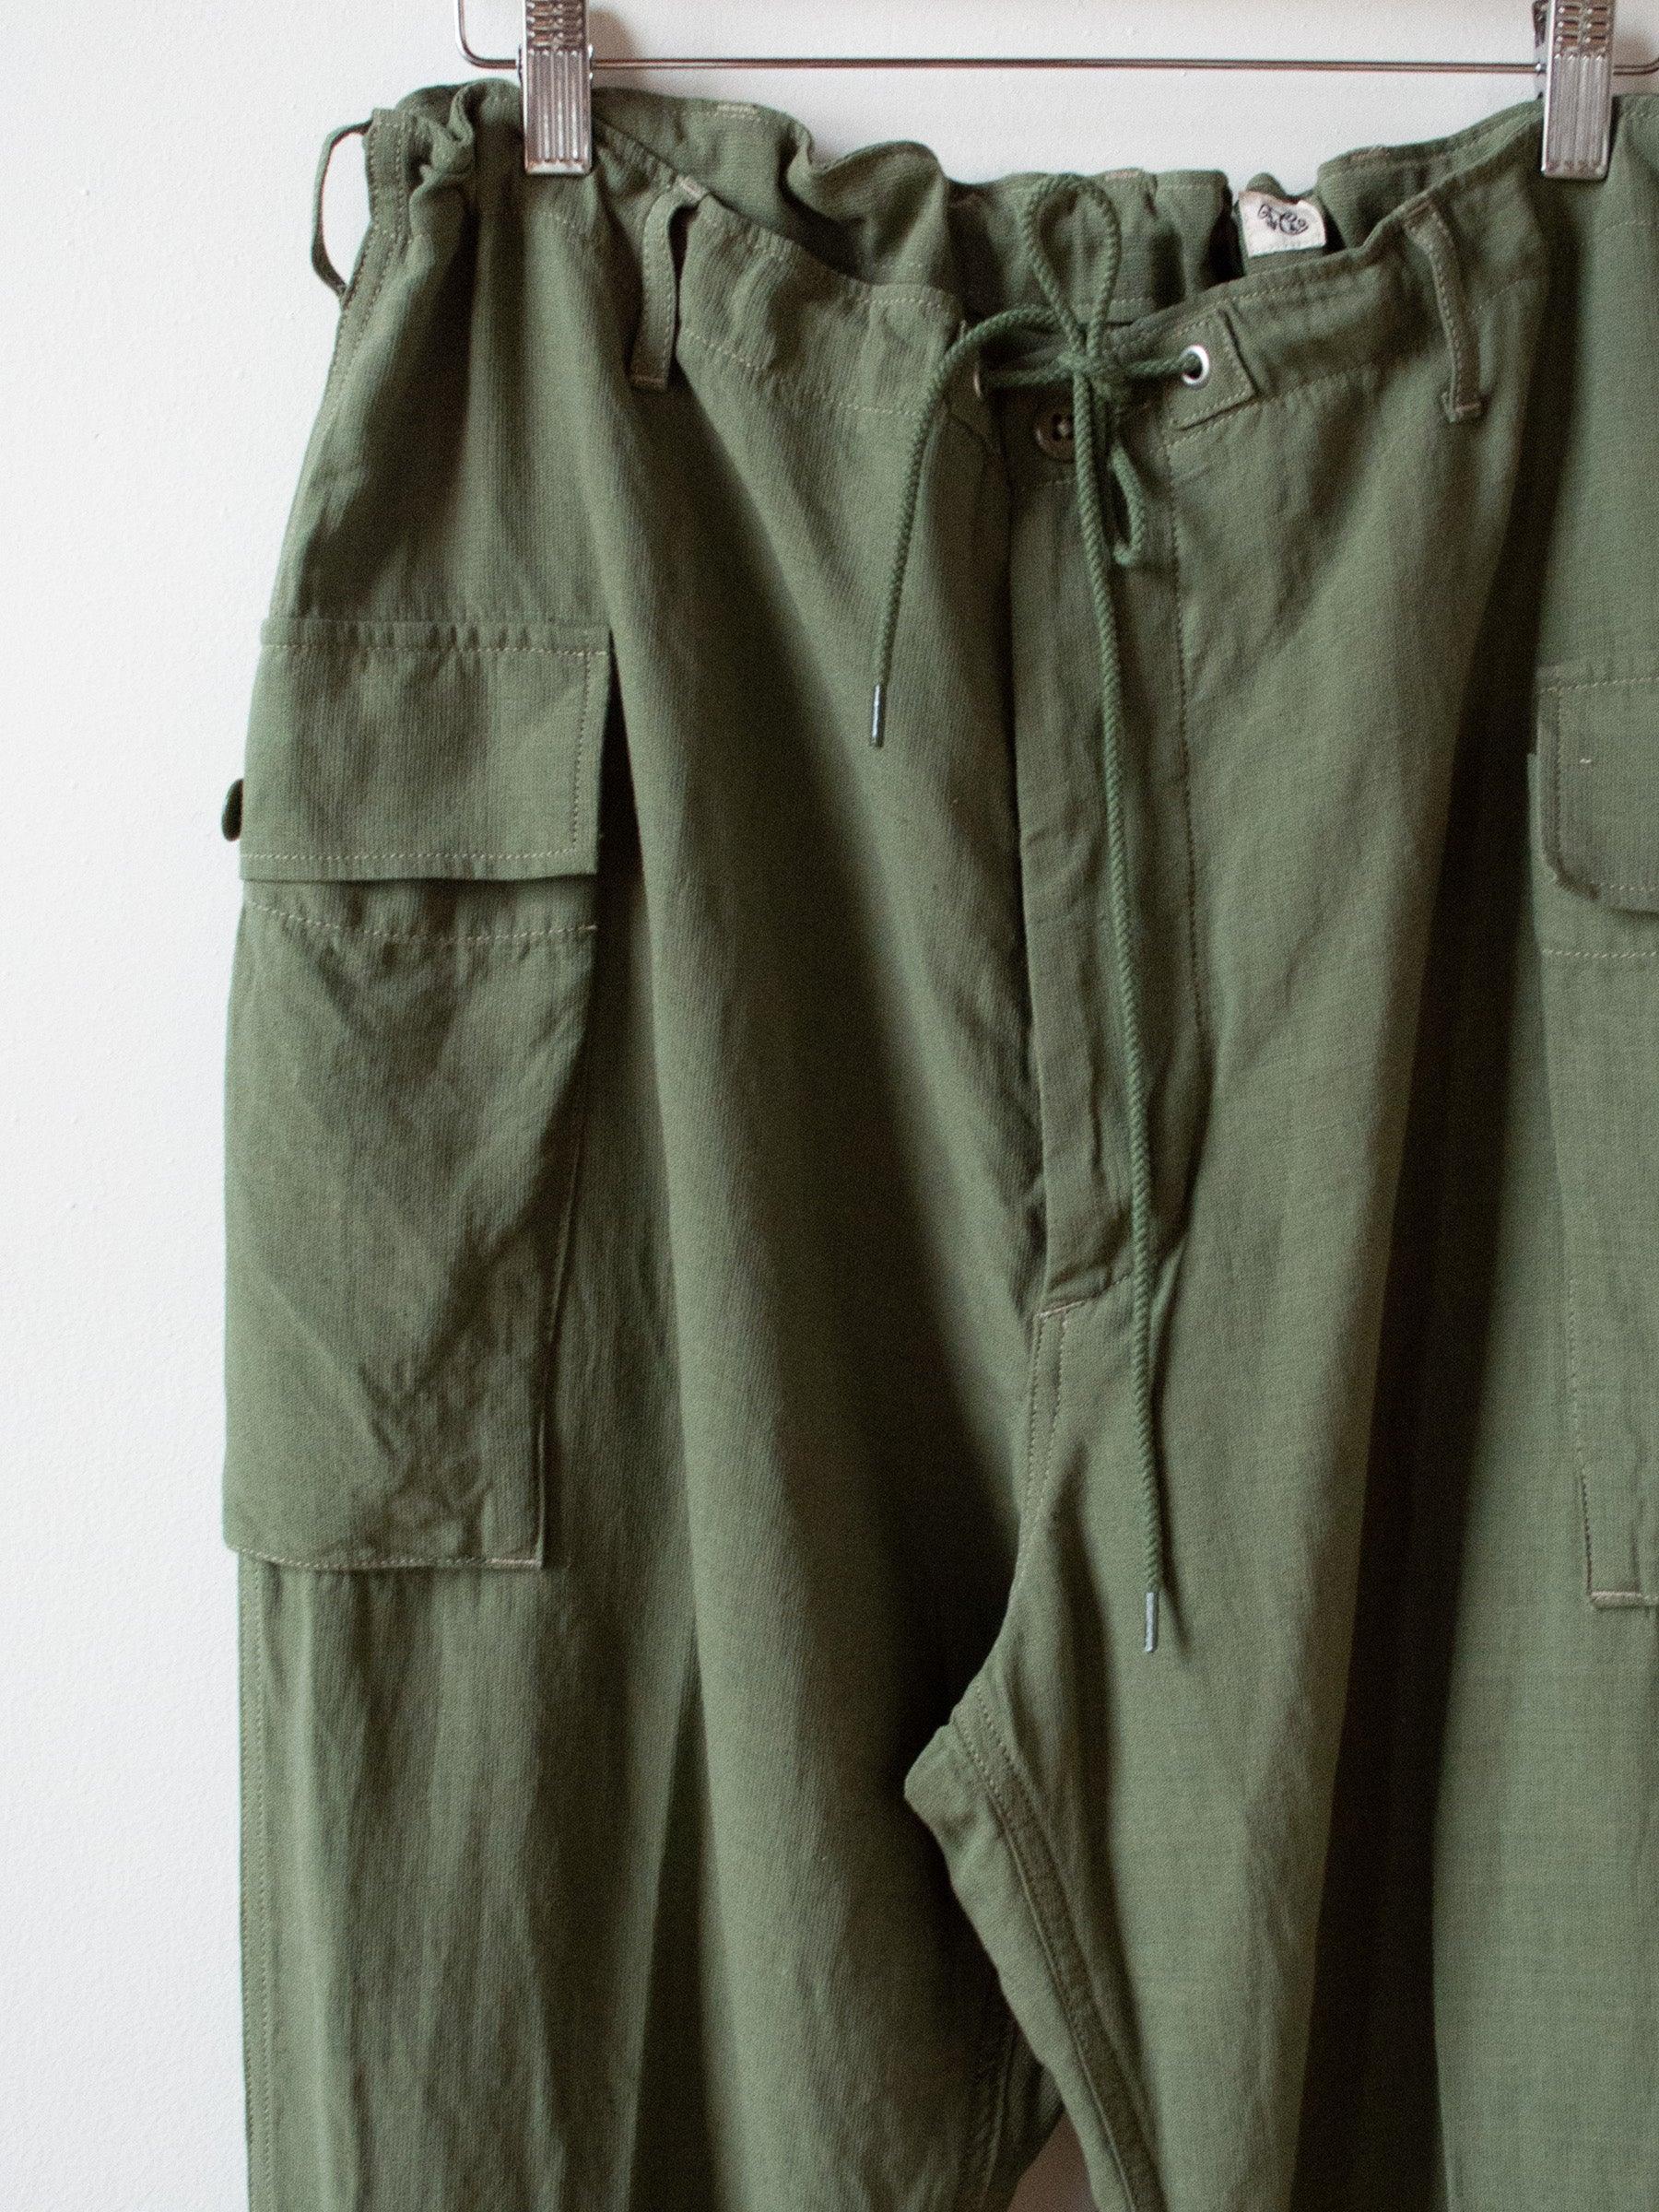 Namu Shop - Kaptain Sunshine Safari Mesh M43 Cargo Pants - Olive